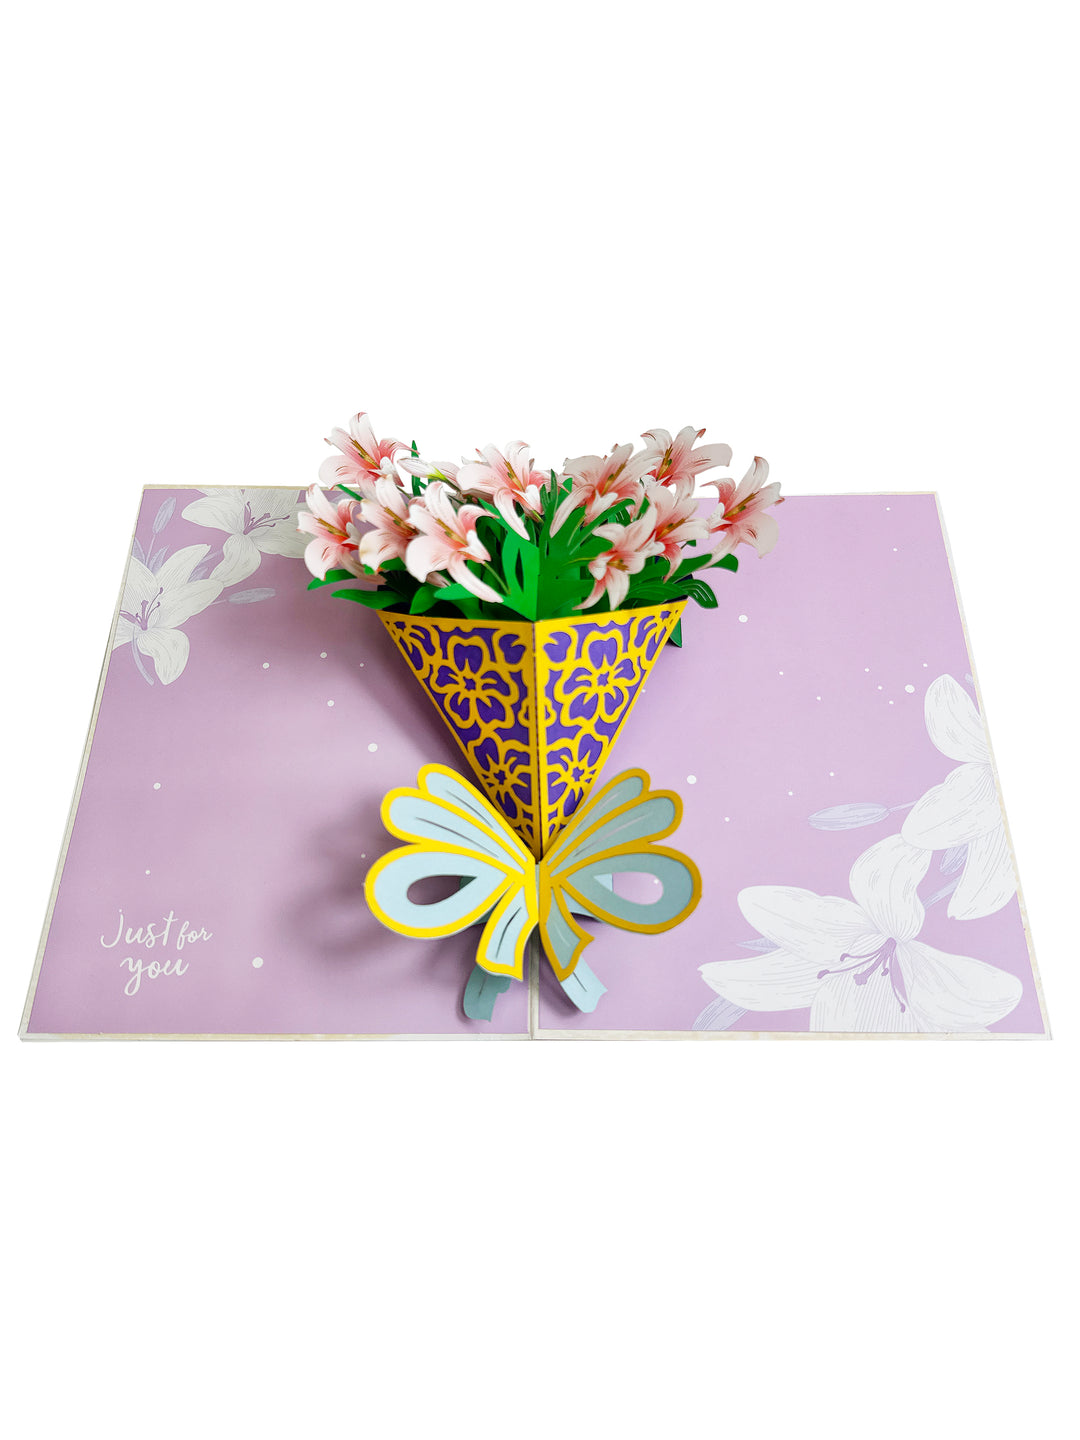 Flower Bouquet Pop-up Multi-Purpose Greeting Card